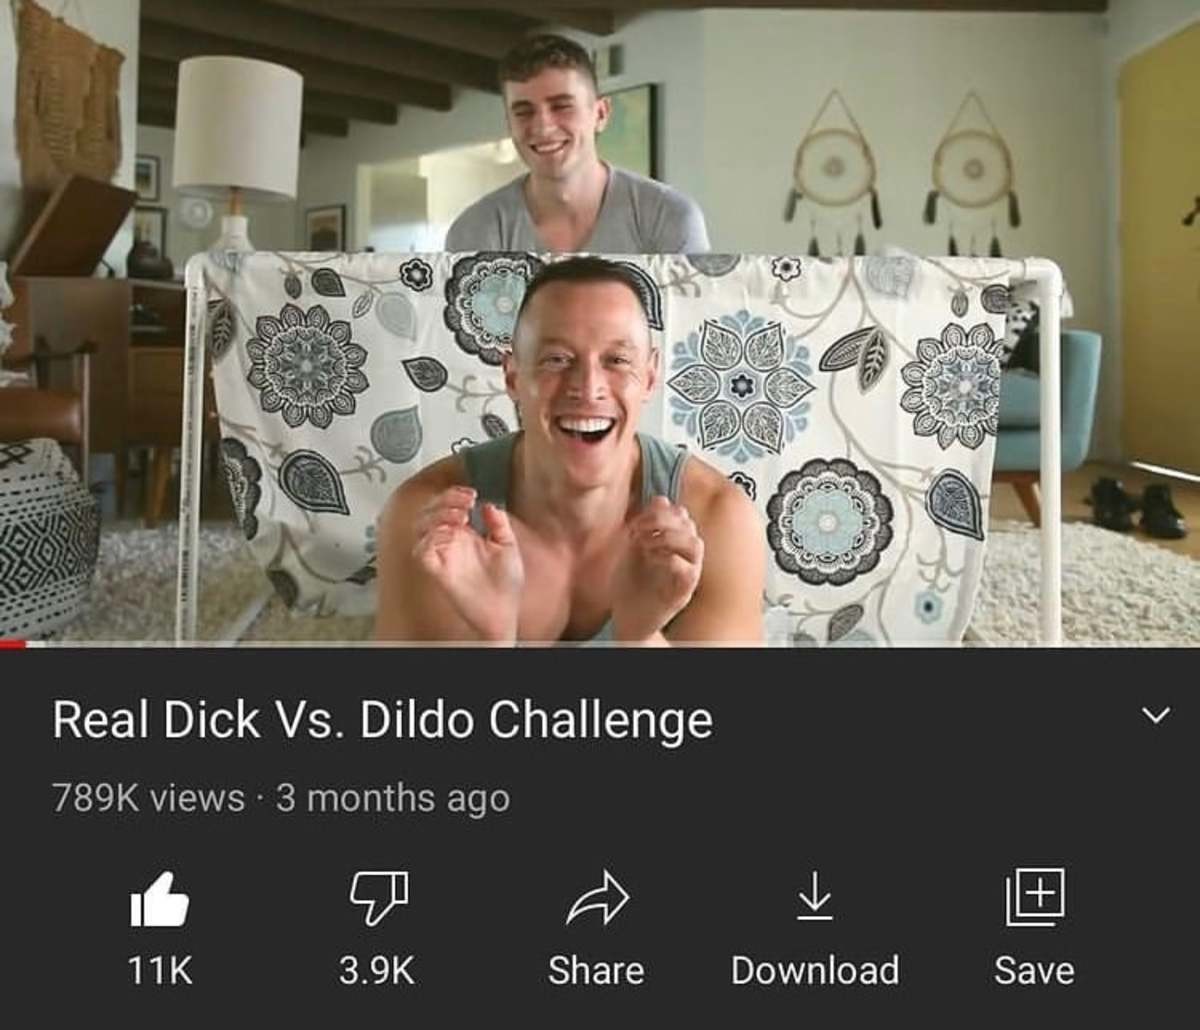 Real dick vs dildo challenge